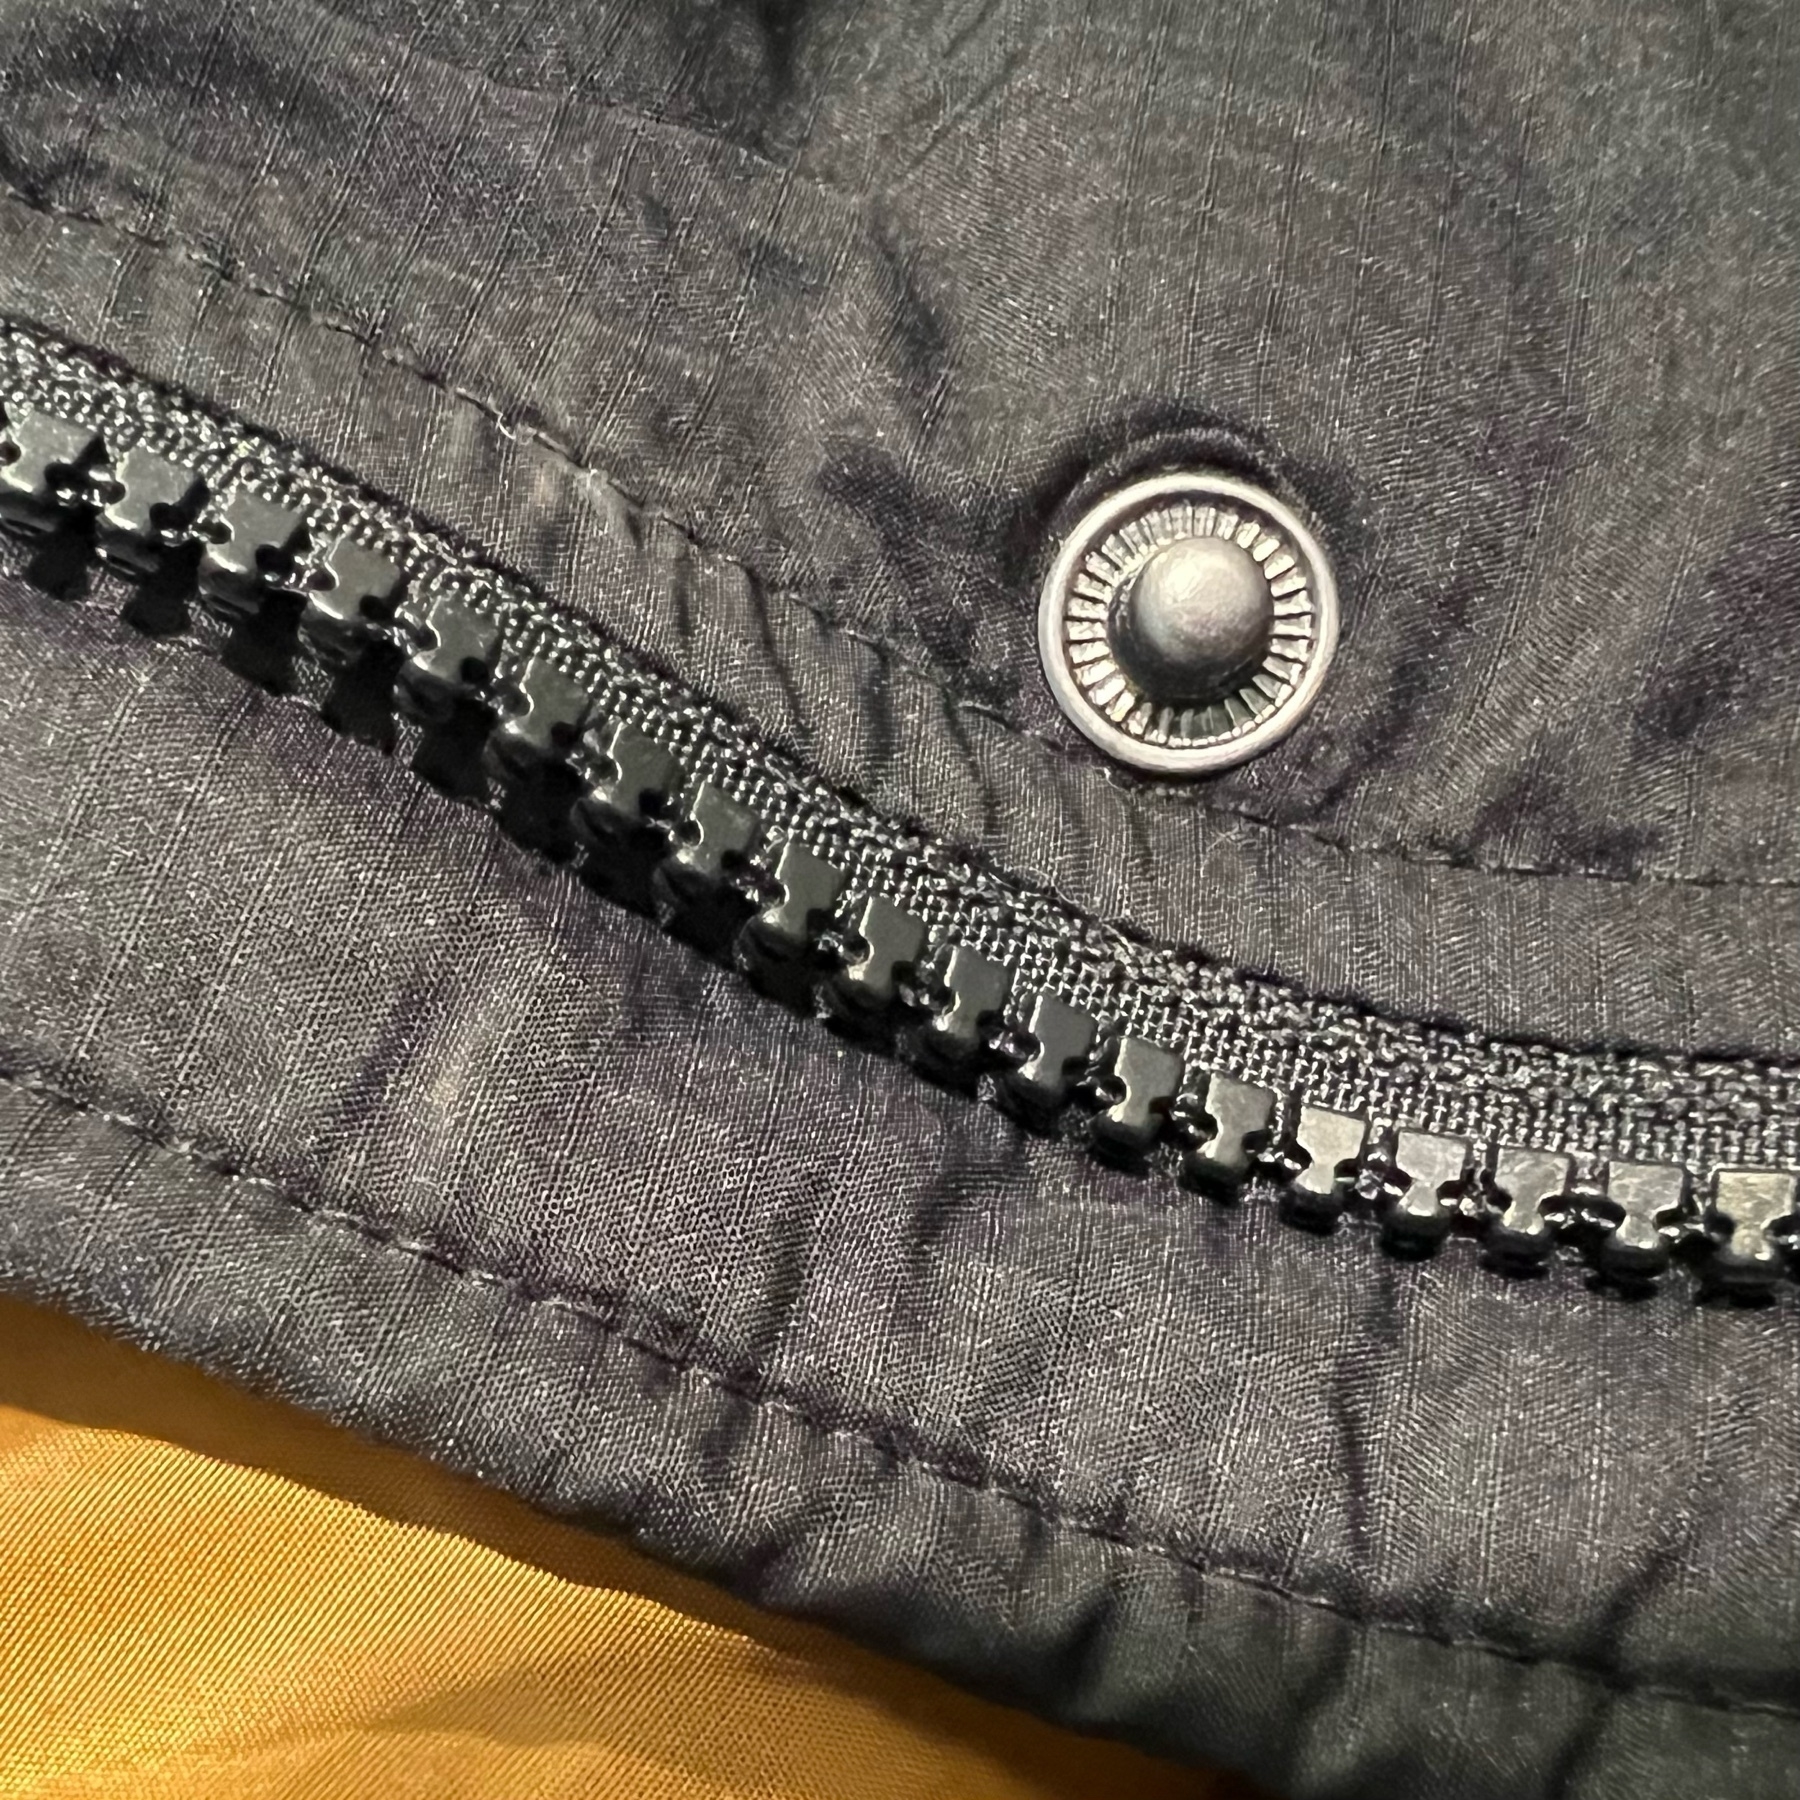 The zip on a Passenger coat.